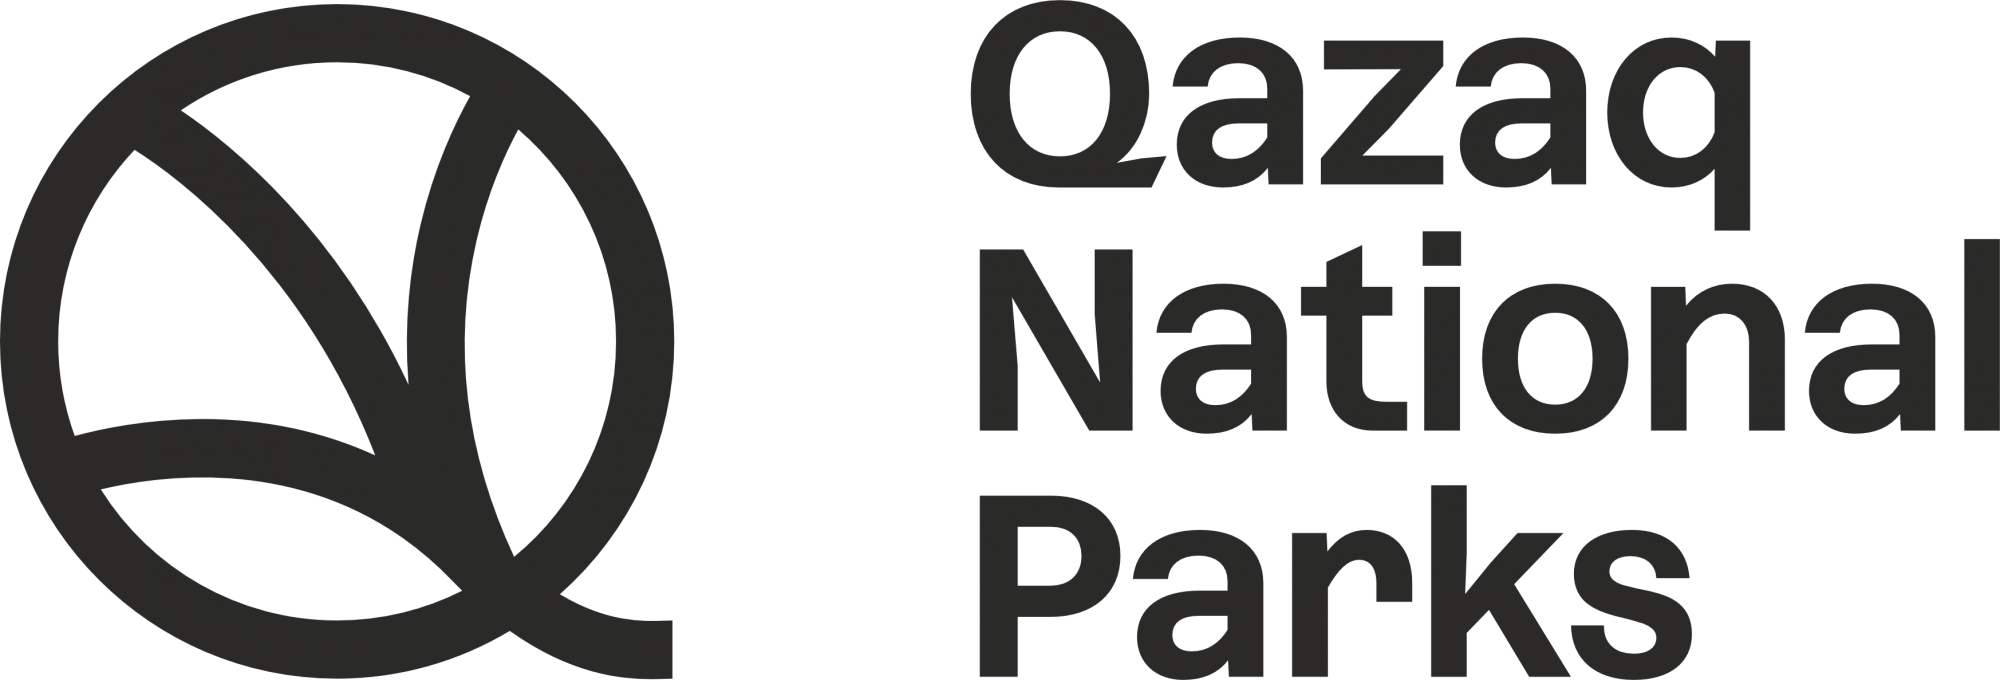 Qazaq National Parks